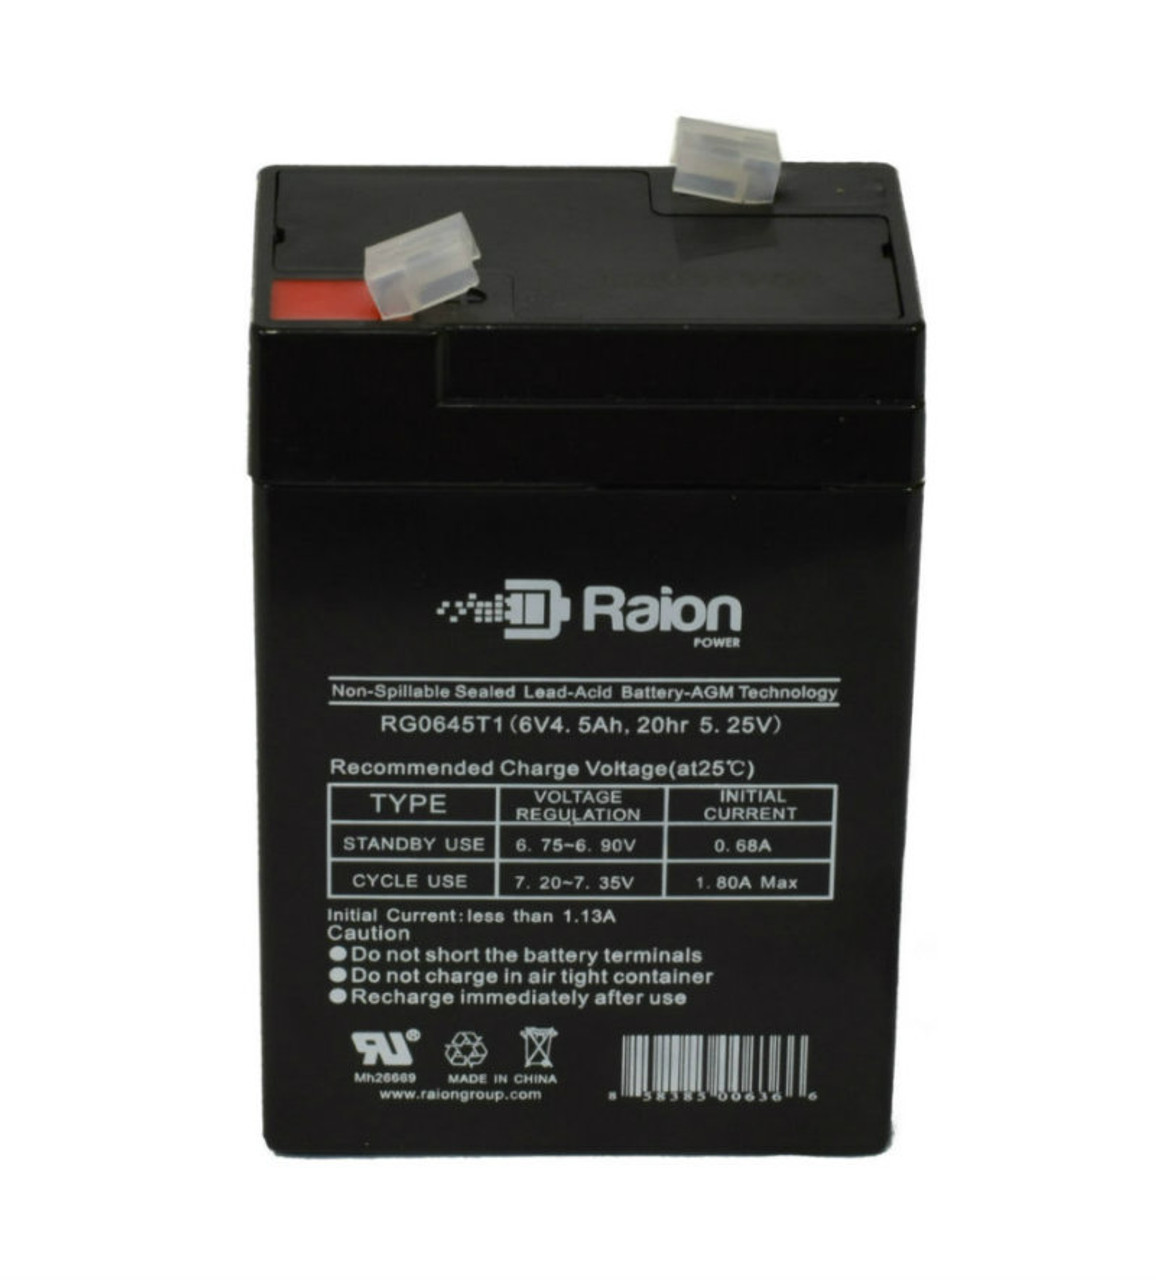 Raion Power RG0645T1 Replacement Battery Cartridge for B. Braun 522 Intell Pump